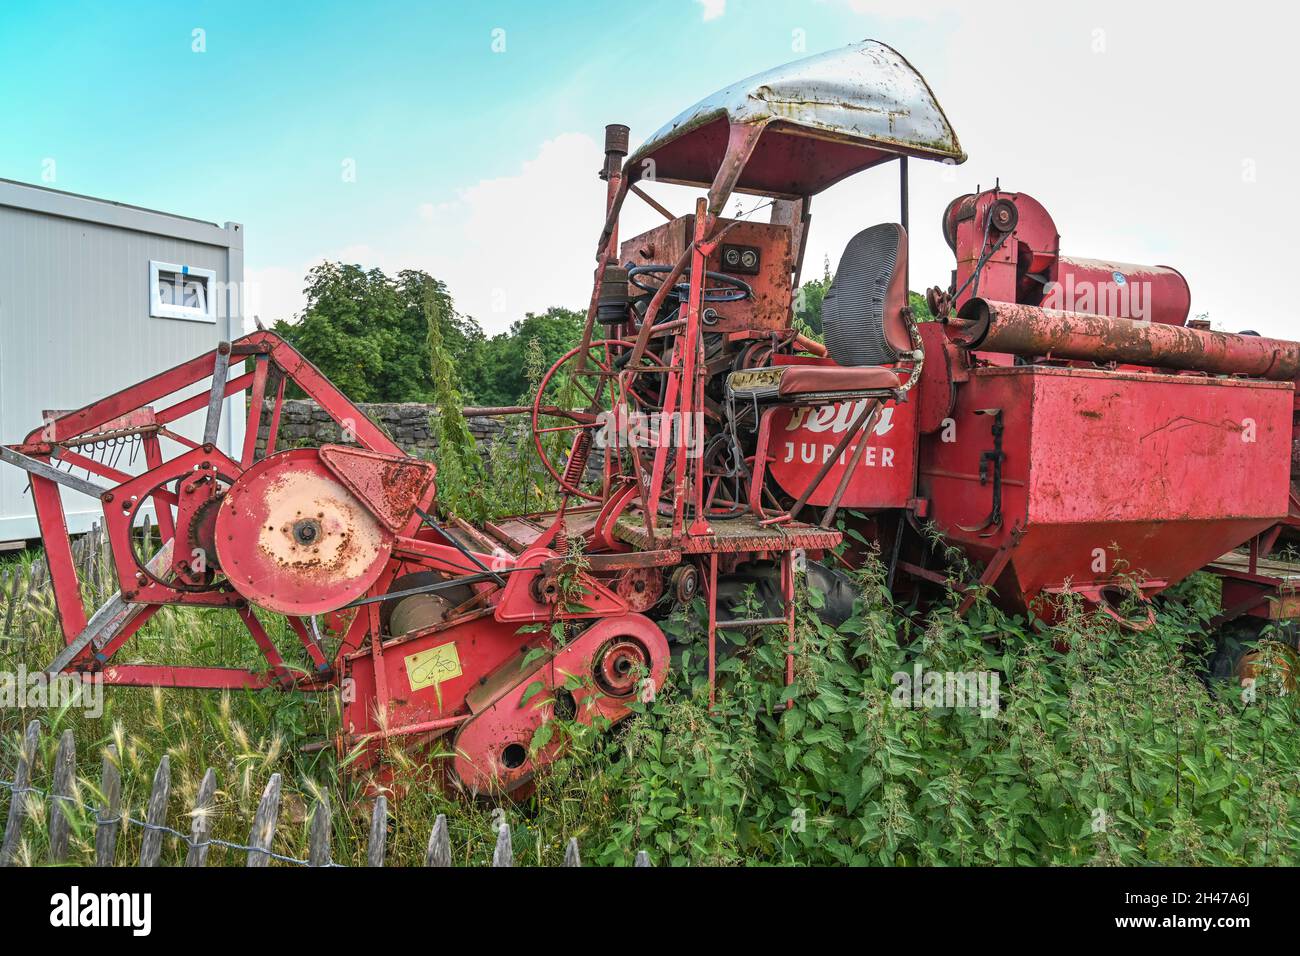 Ausstellung historische Landmaschinen, Mähdrescher Fella Jupiter, Wasserschloss Wülmersen, Hessen, Deutschland Foto Stock